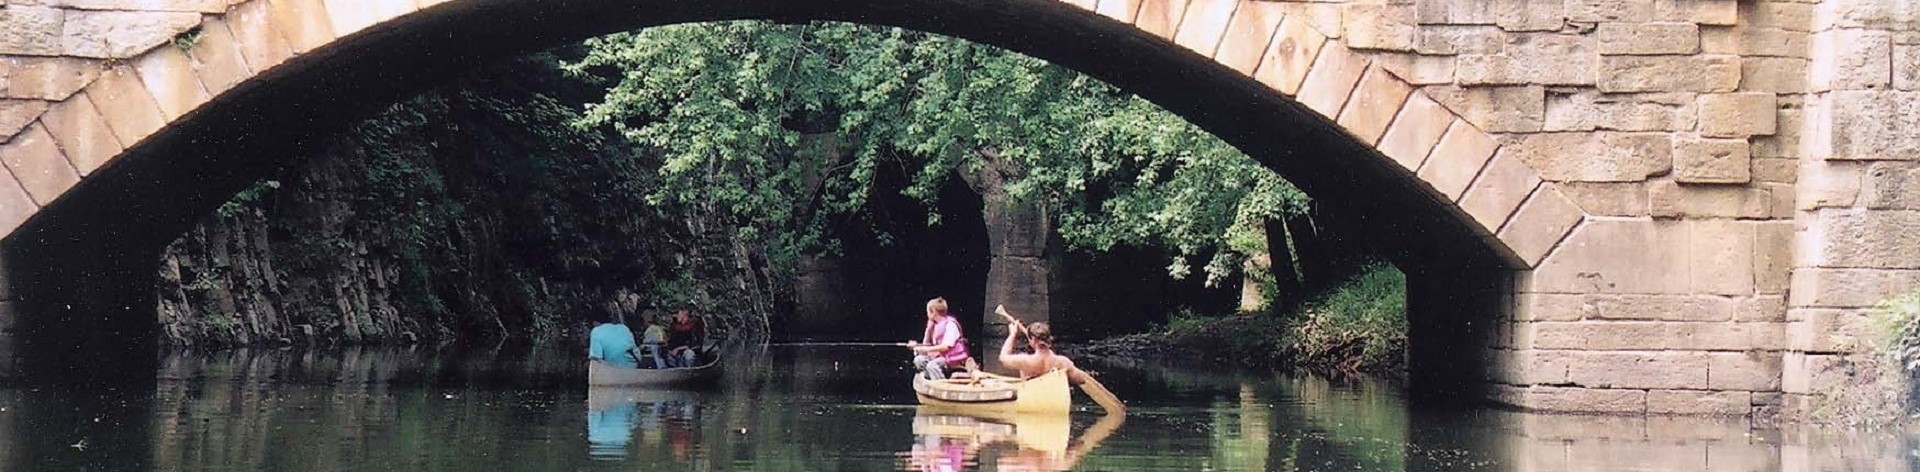 Canoe in Potomac, Maryland - CarDonations4Cancer.org